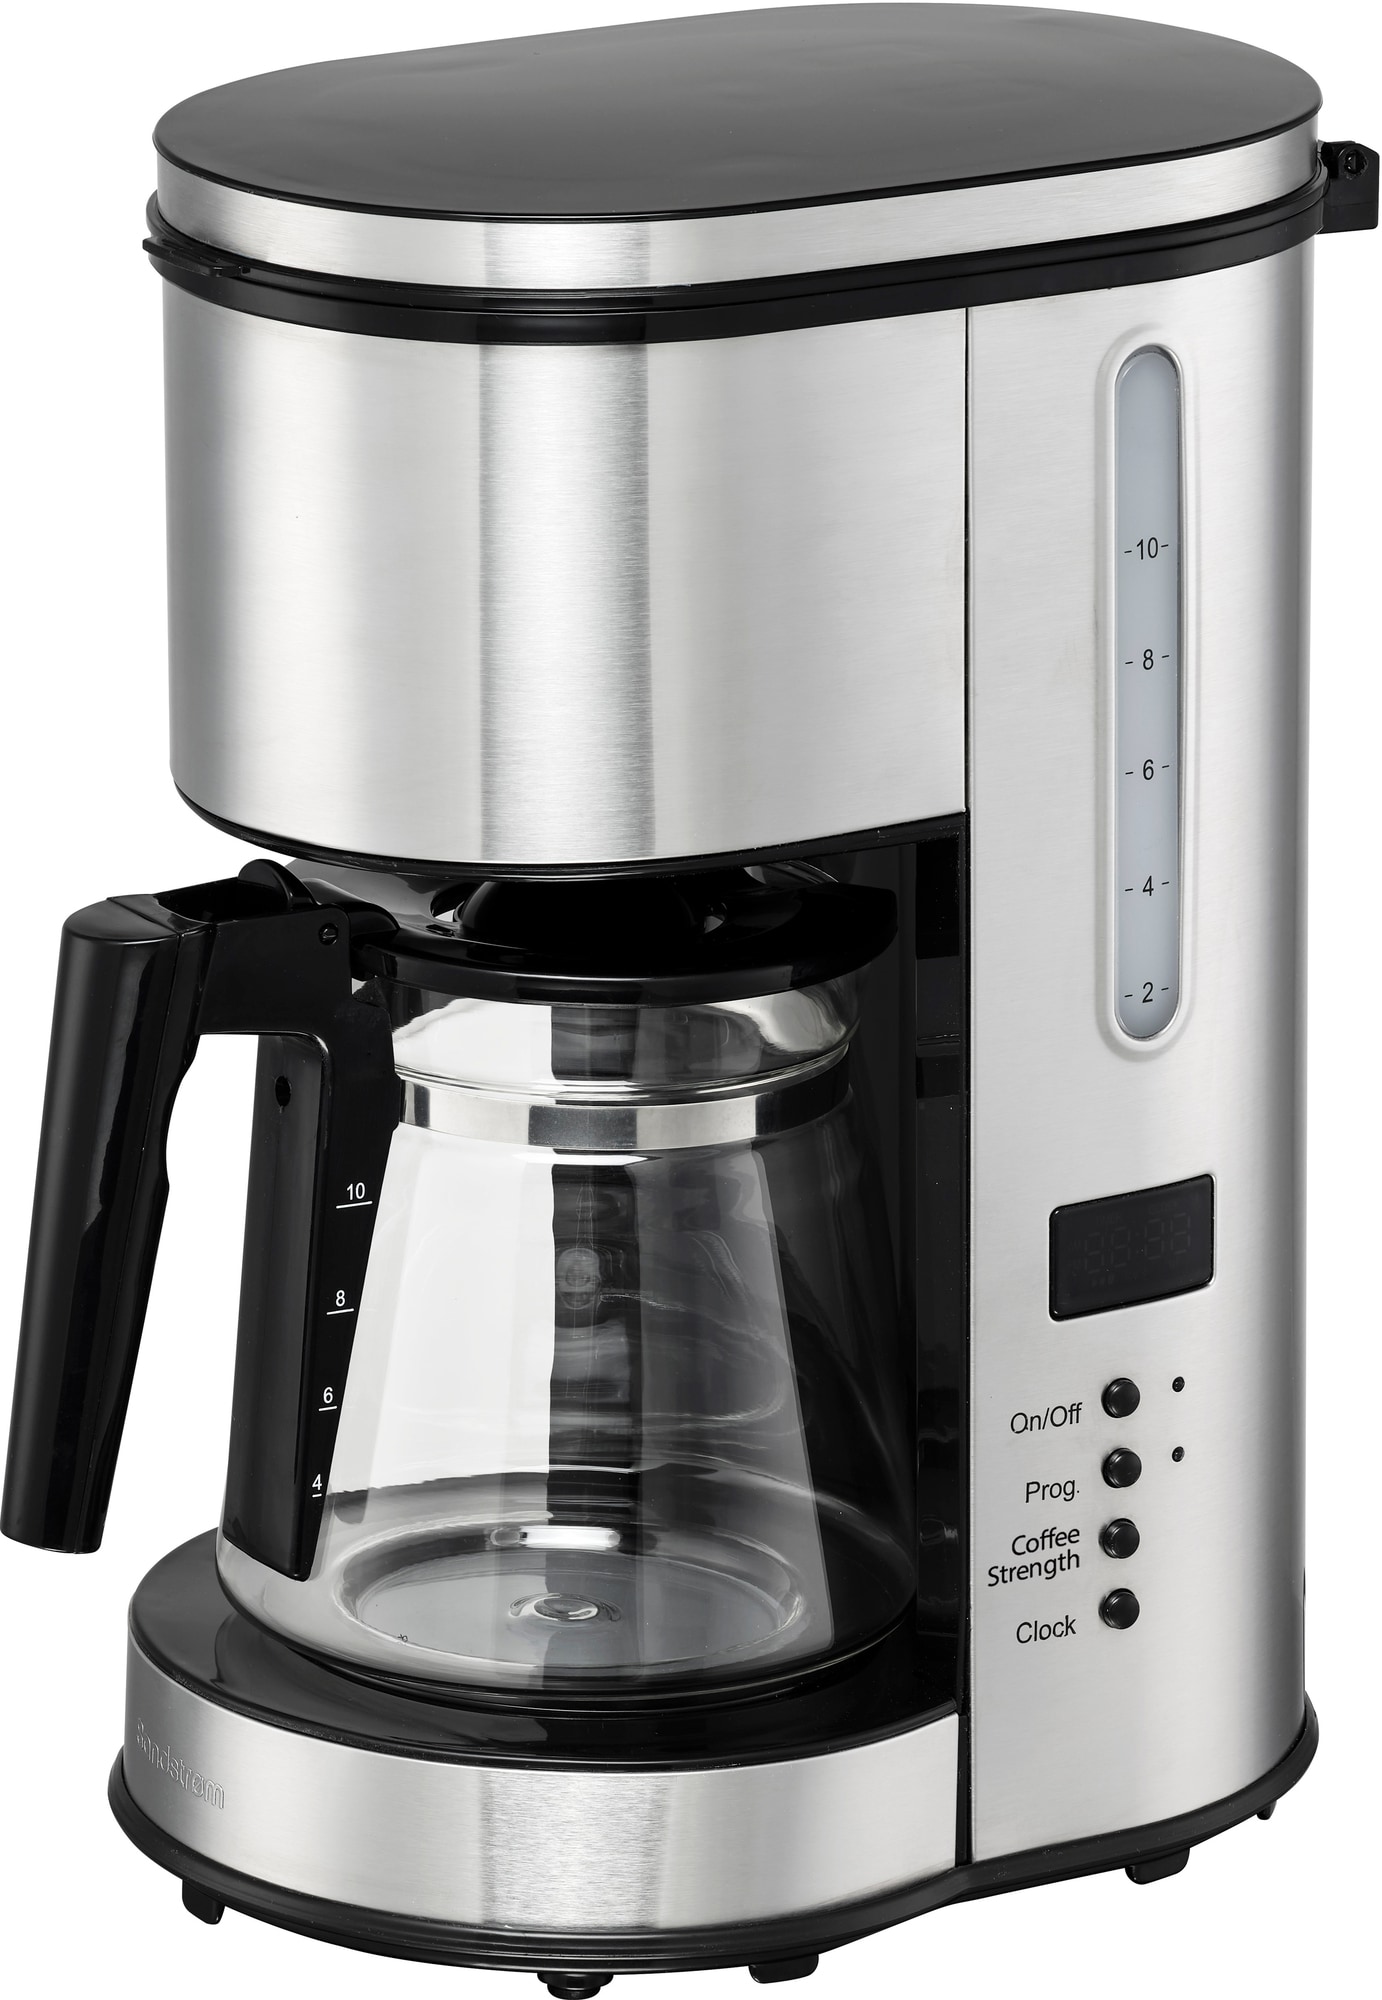 1: Sandstrøm kaffemaskine S15DCS21E